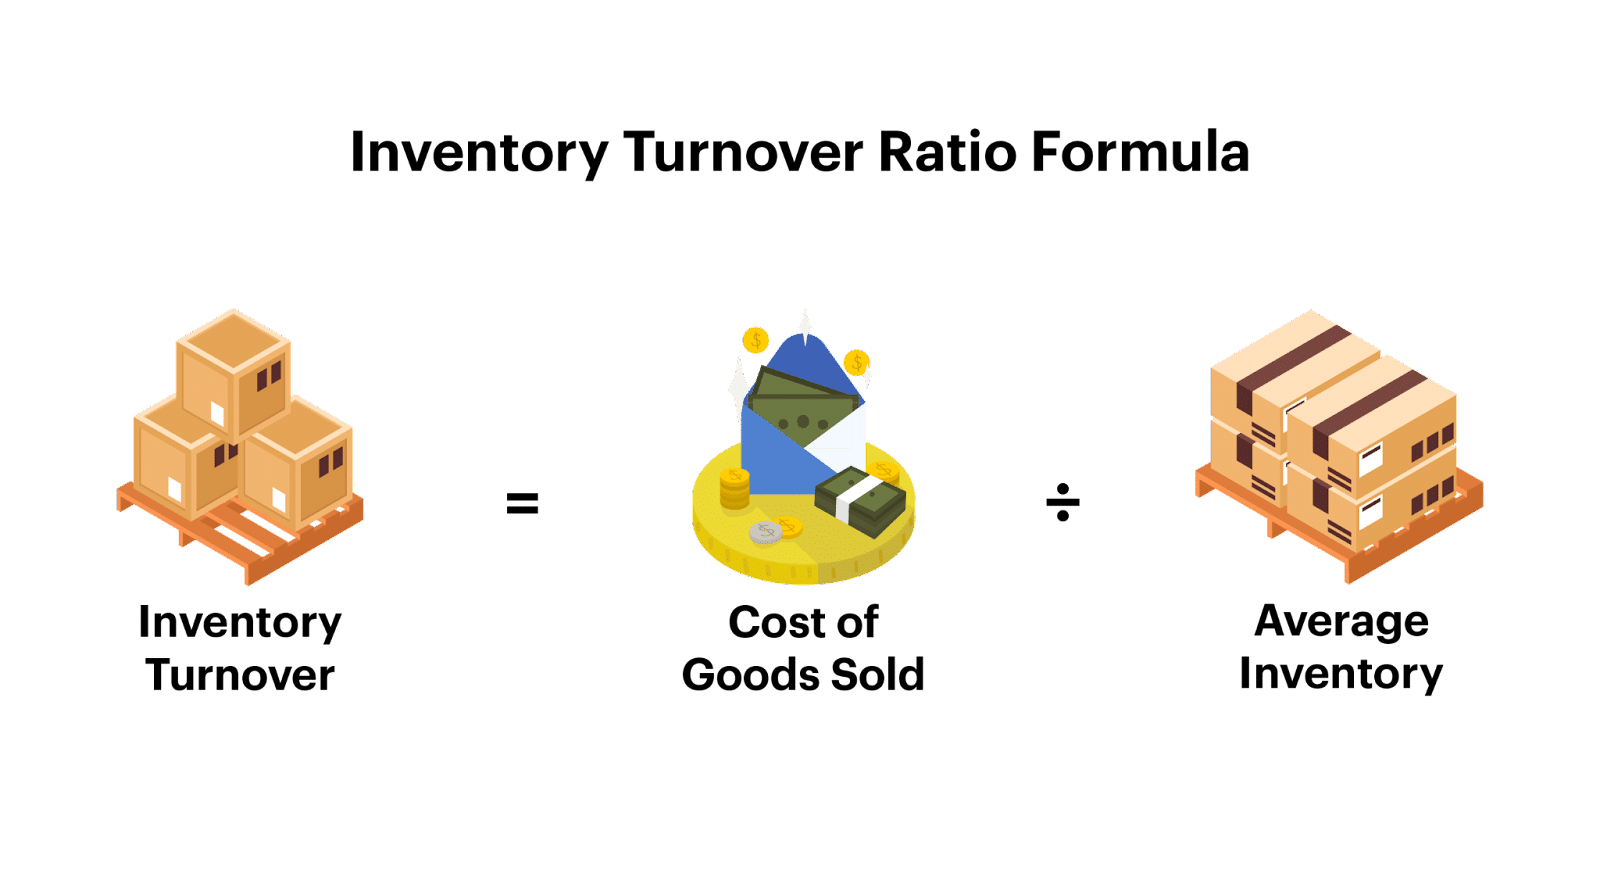 The inventory turnover ratio formula 